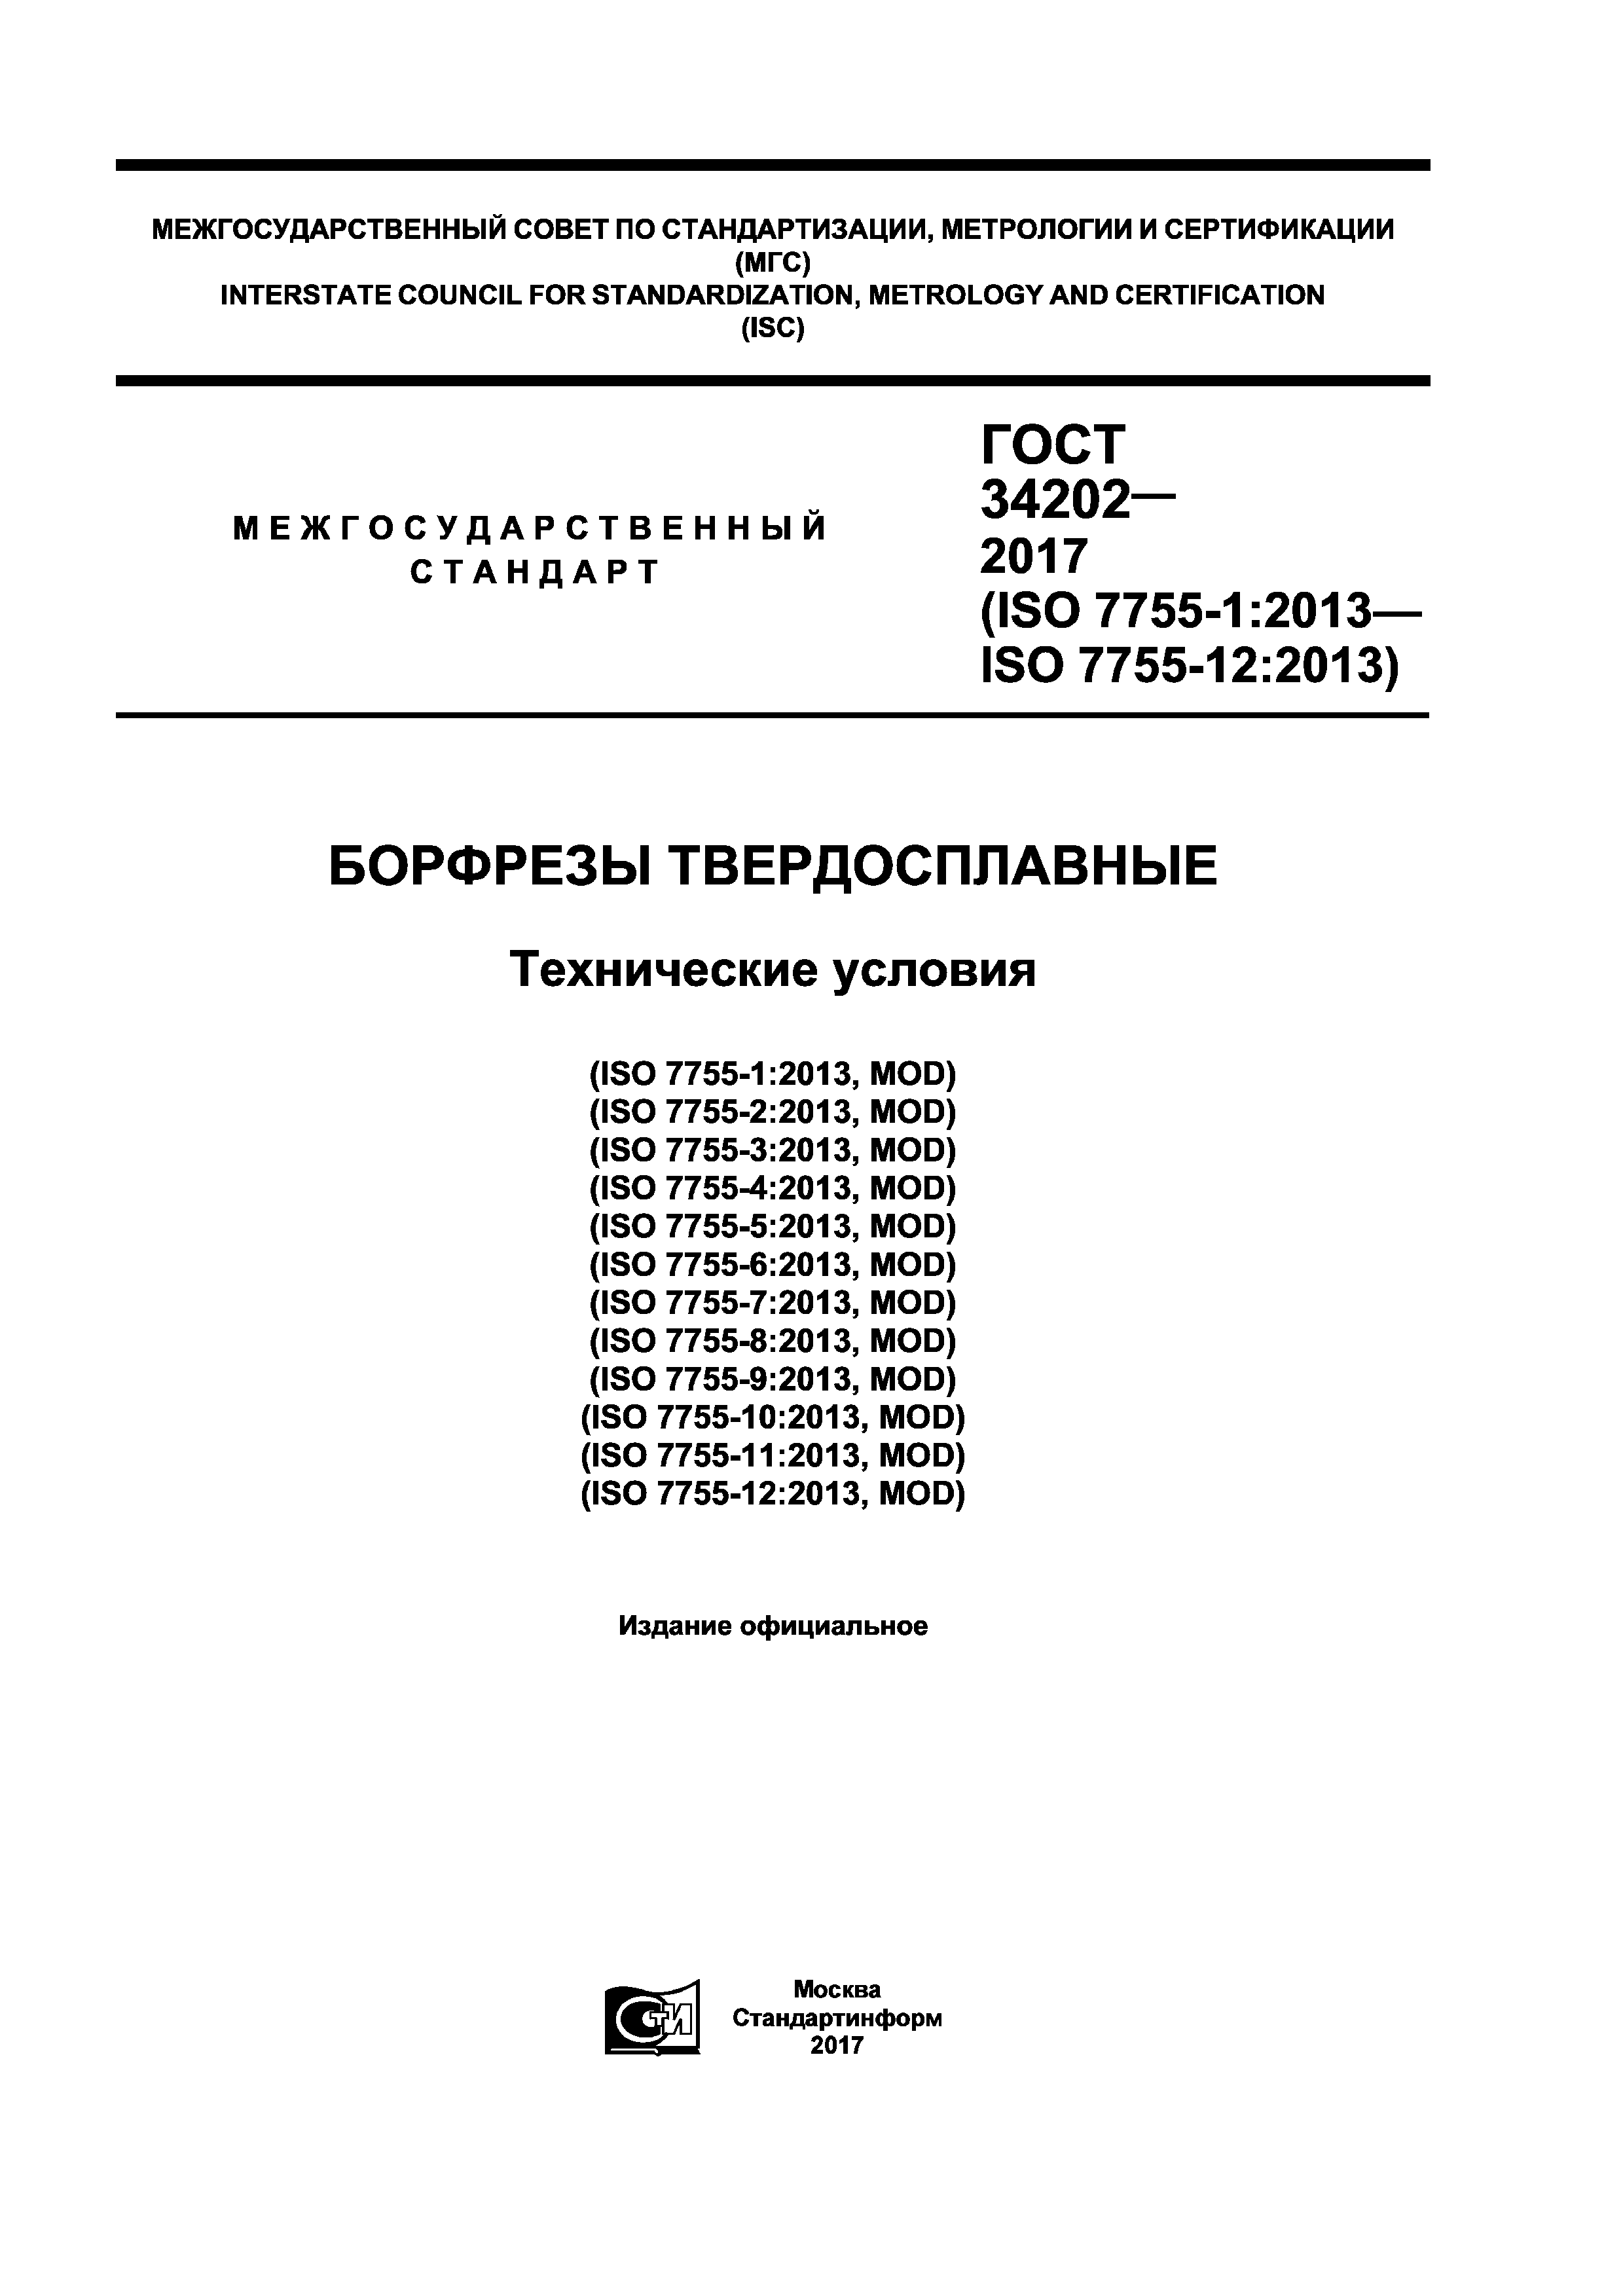 ГОСТ 34202-2017